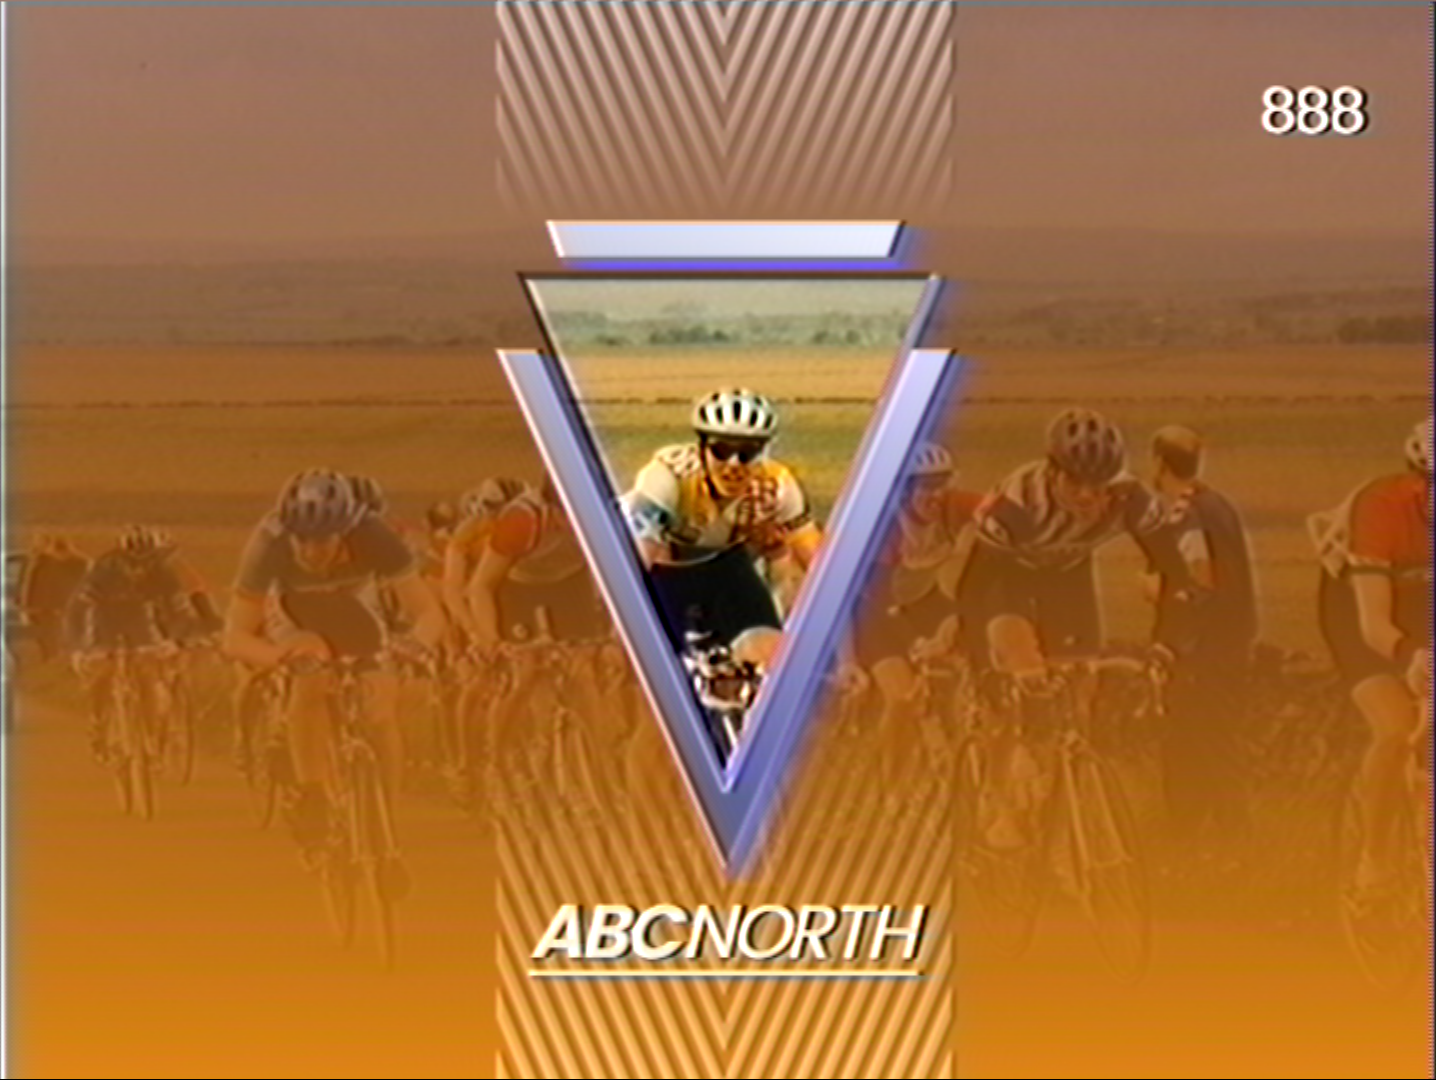 ABC North Ident (1993)